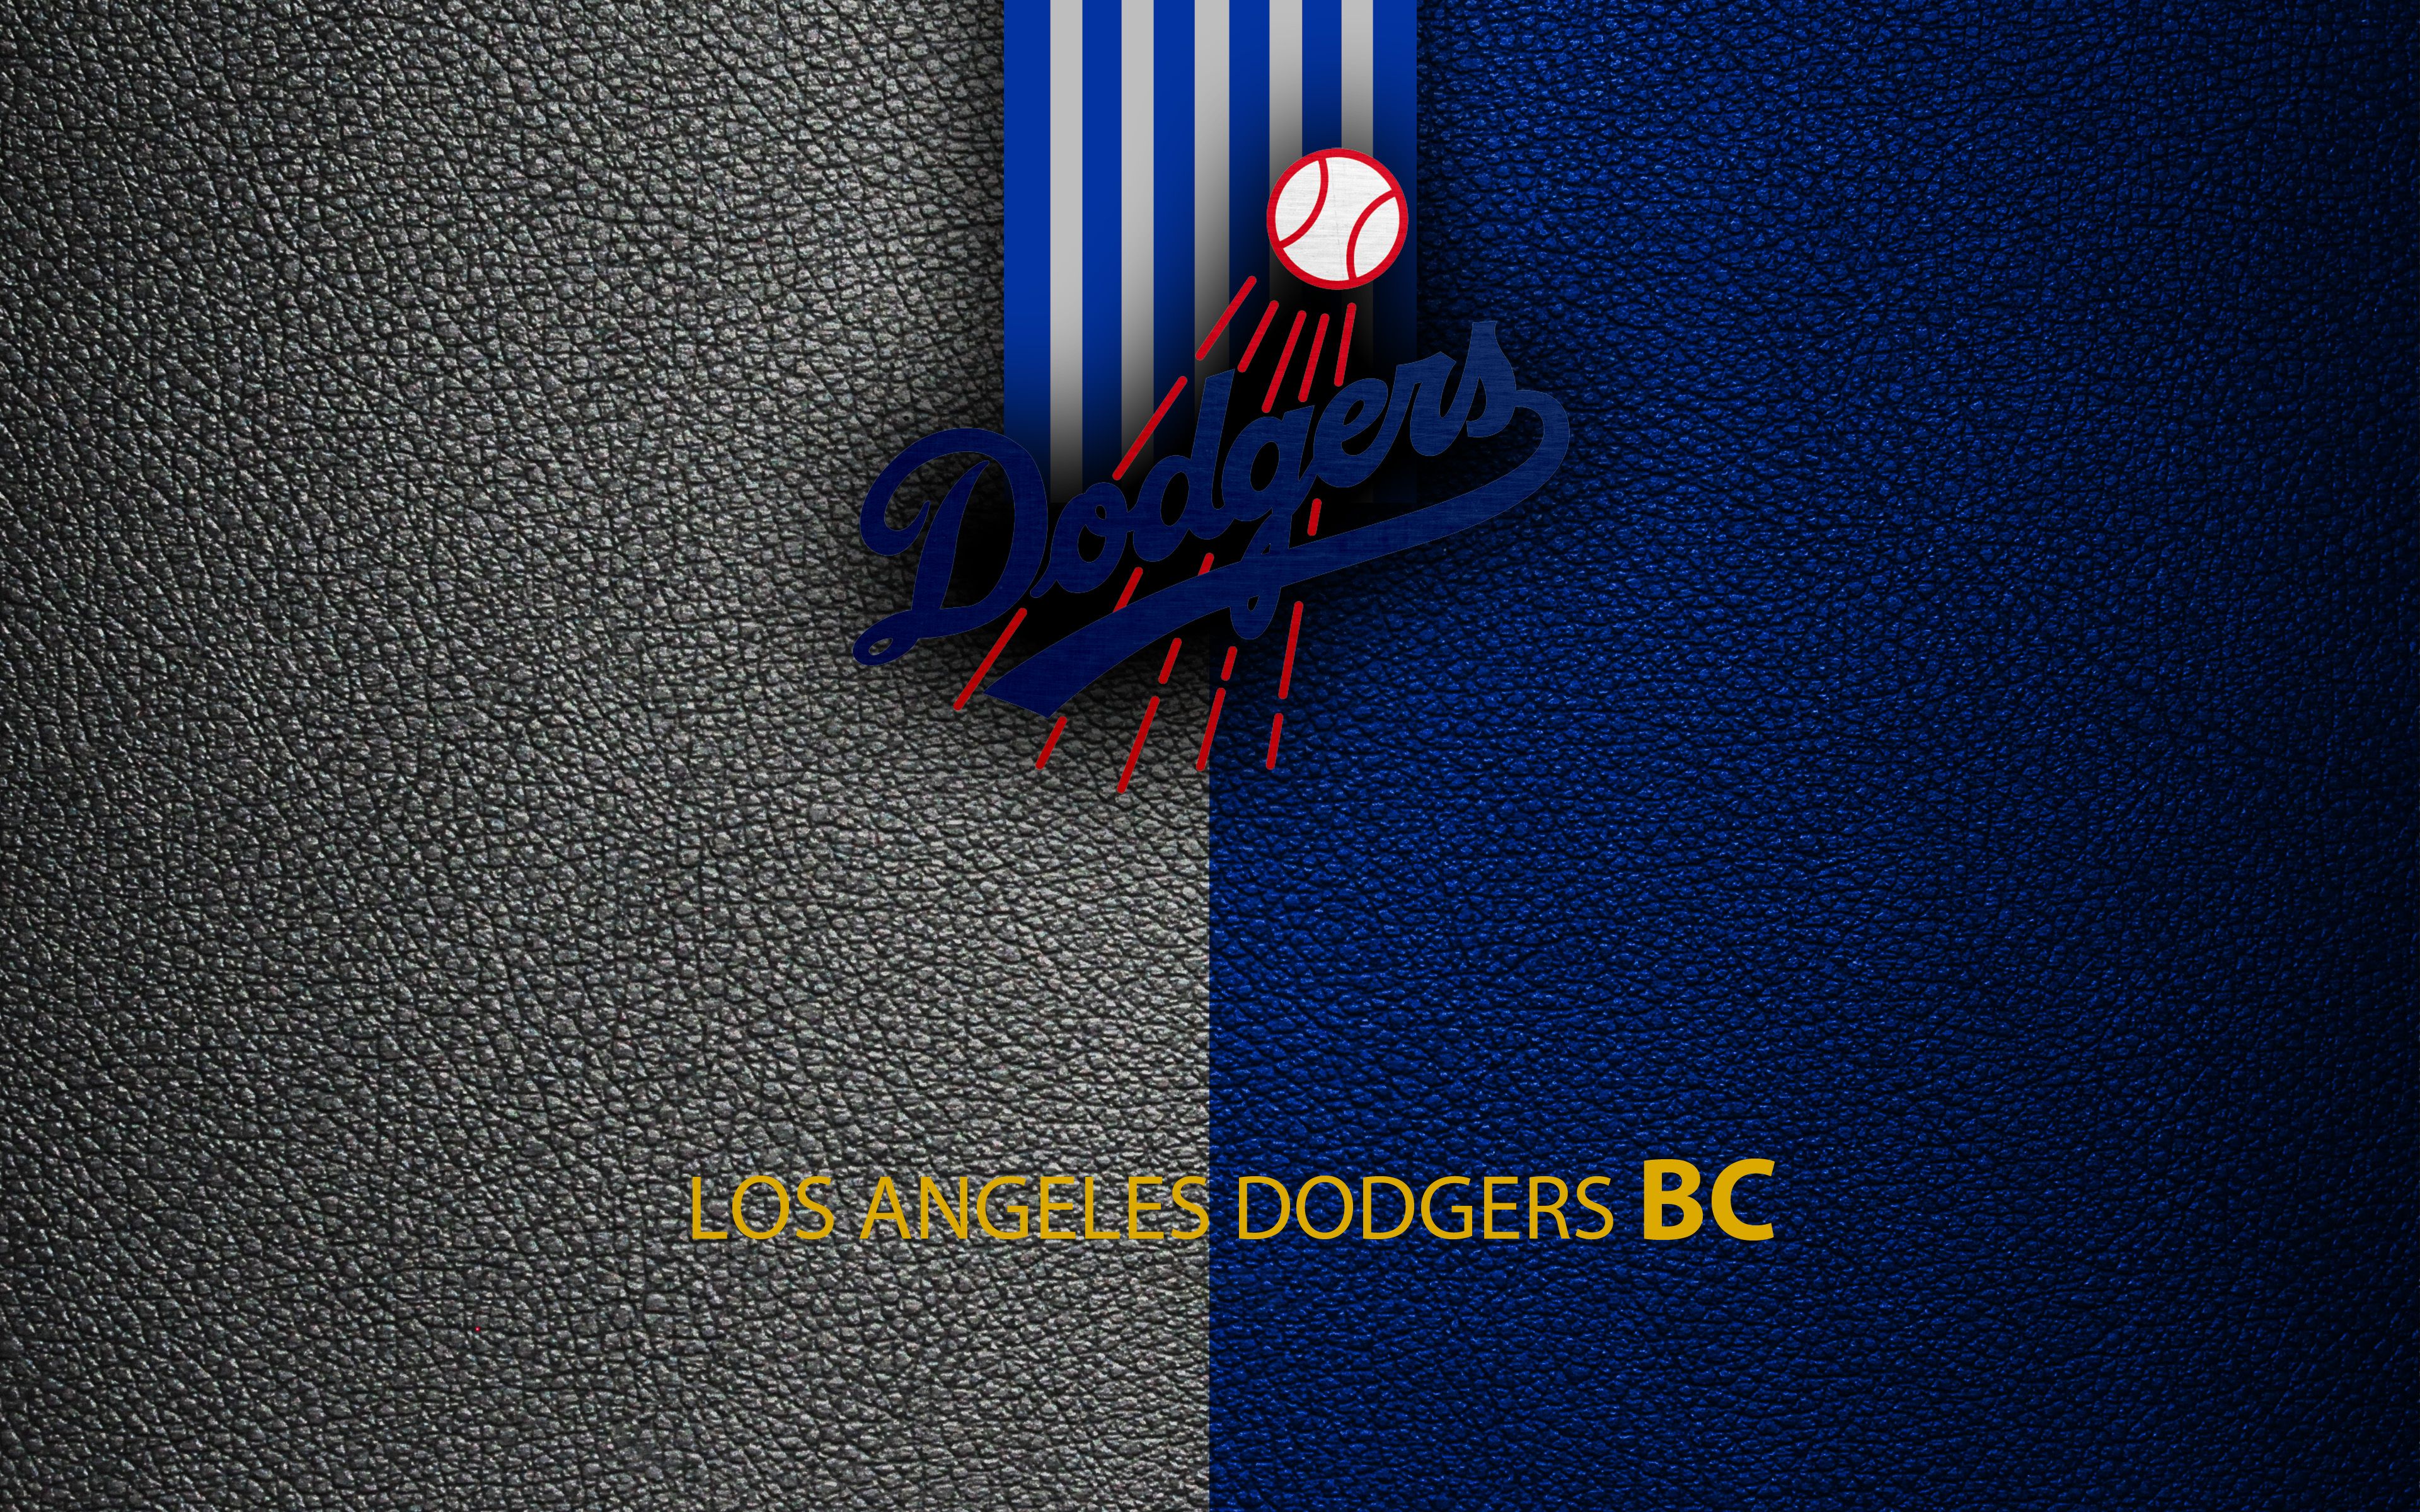 Los Angeles Dodgers 4k Ultra HD Wallpaper. Background Image